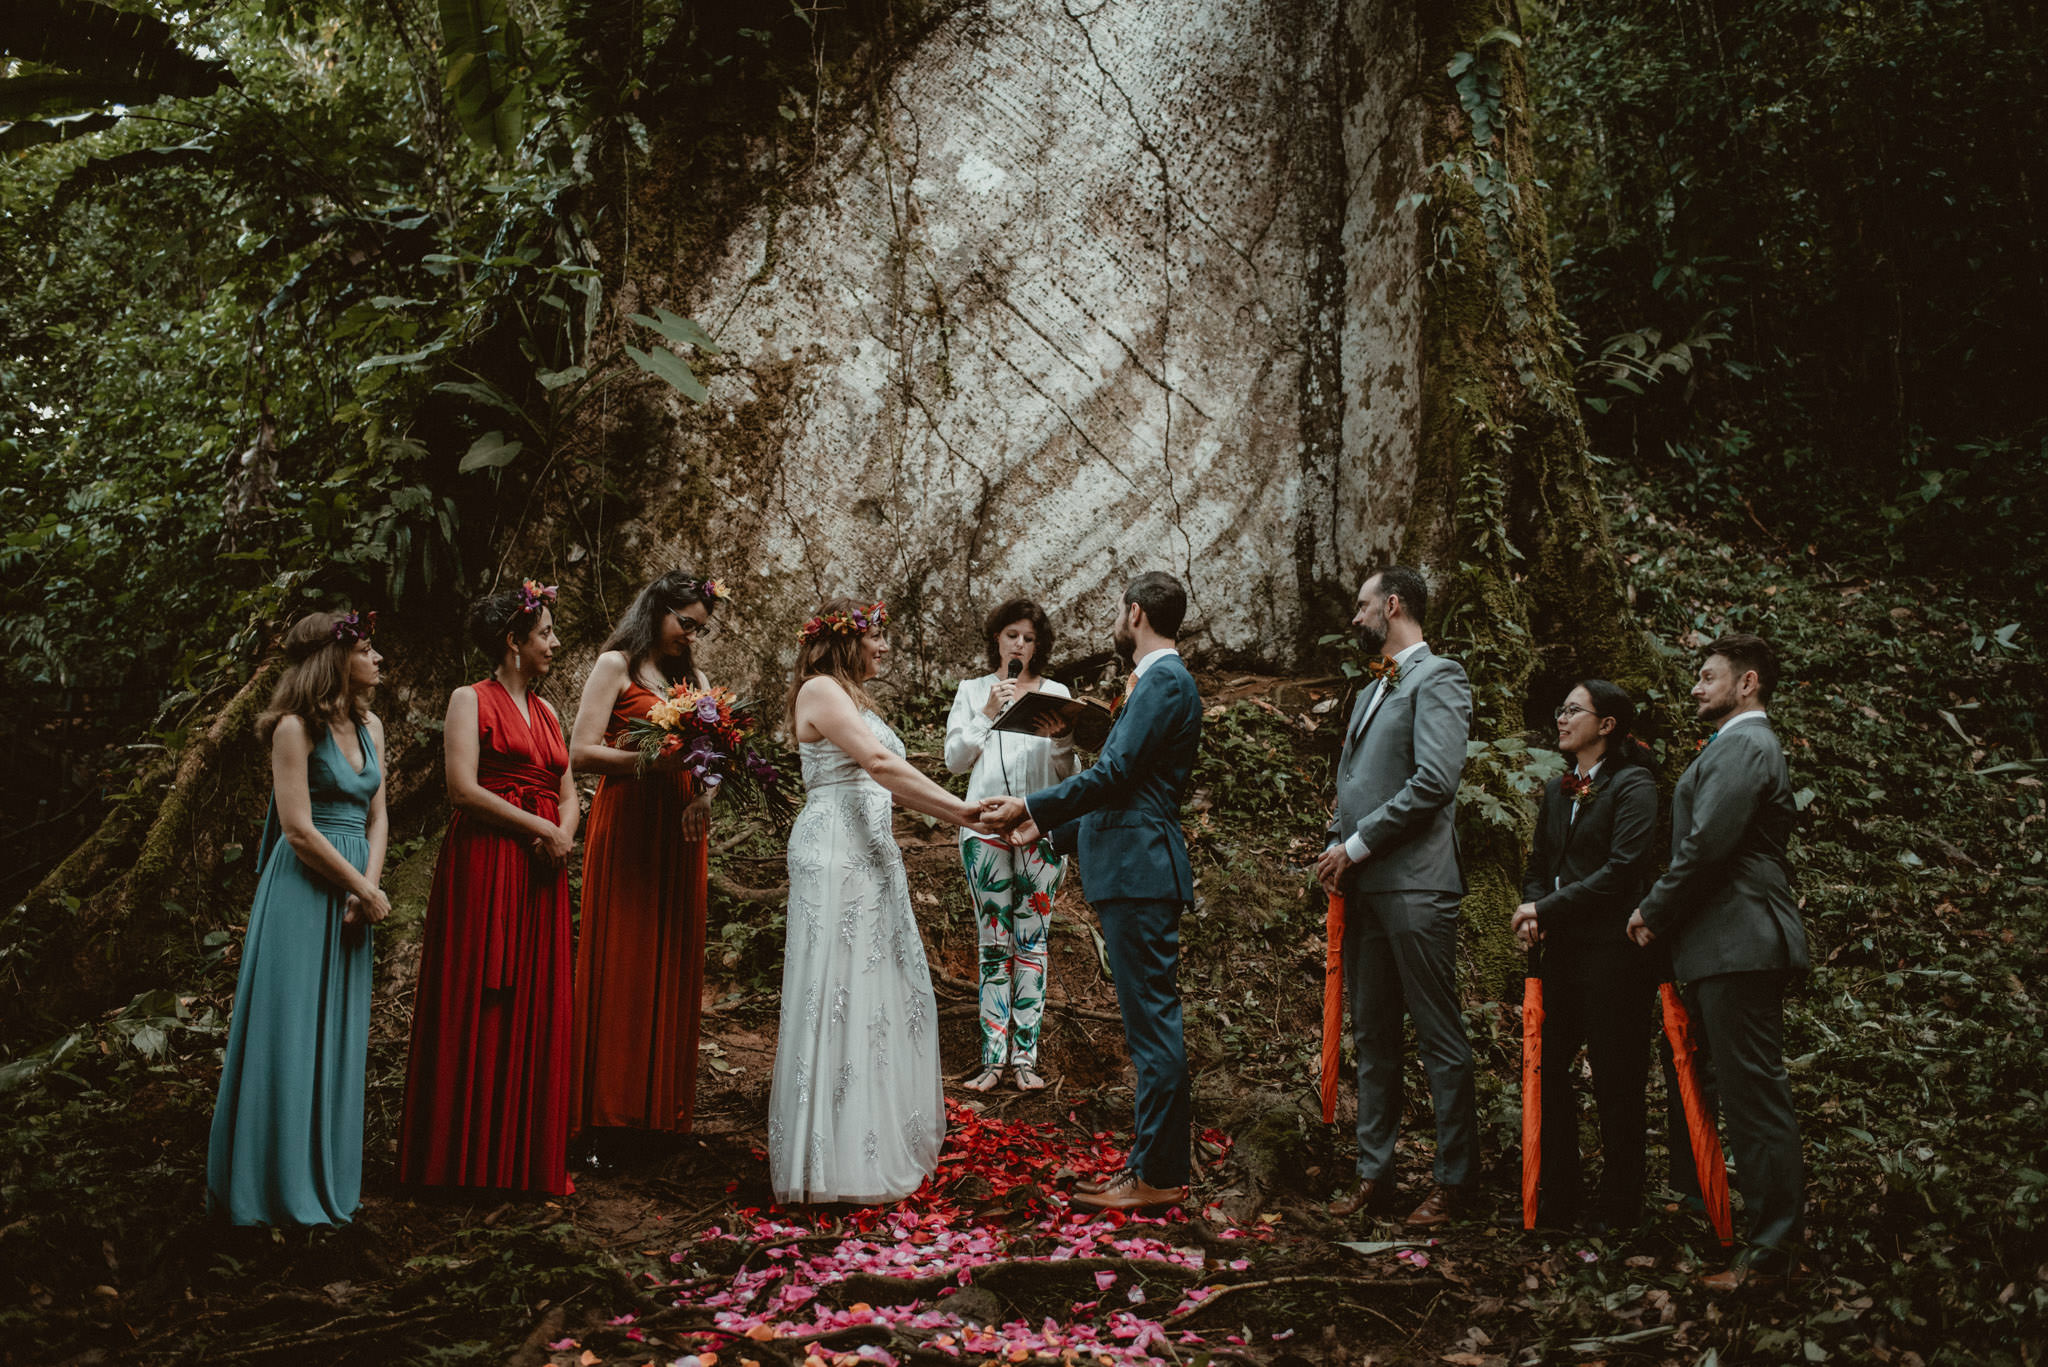 Chachagua Rainforest Ecolodge Wedding | Costa Rica